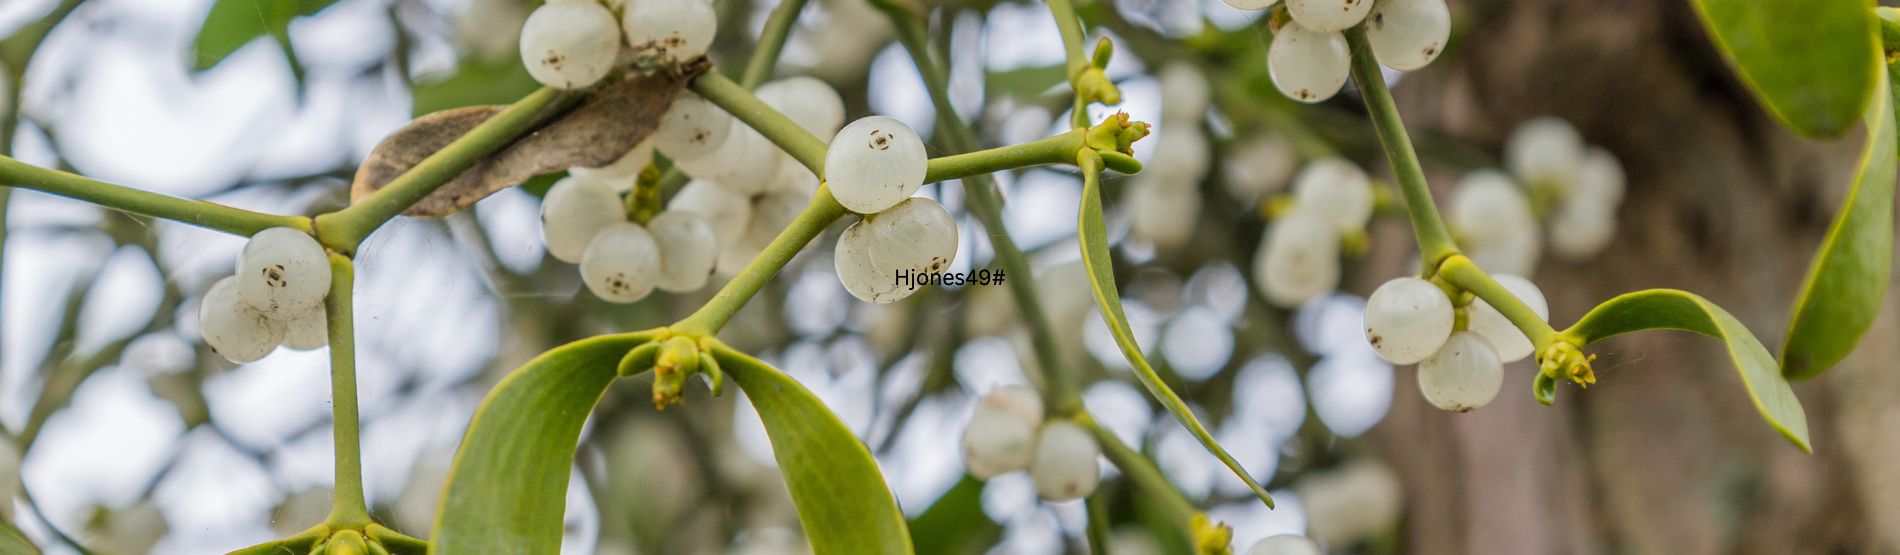 Mistletoe plant